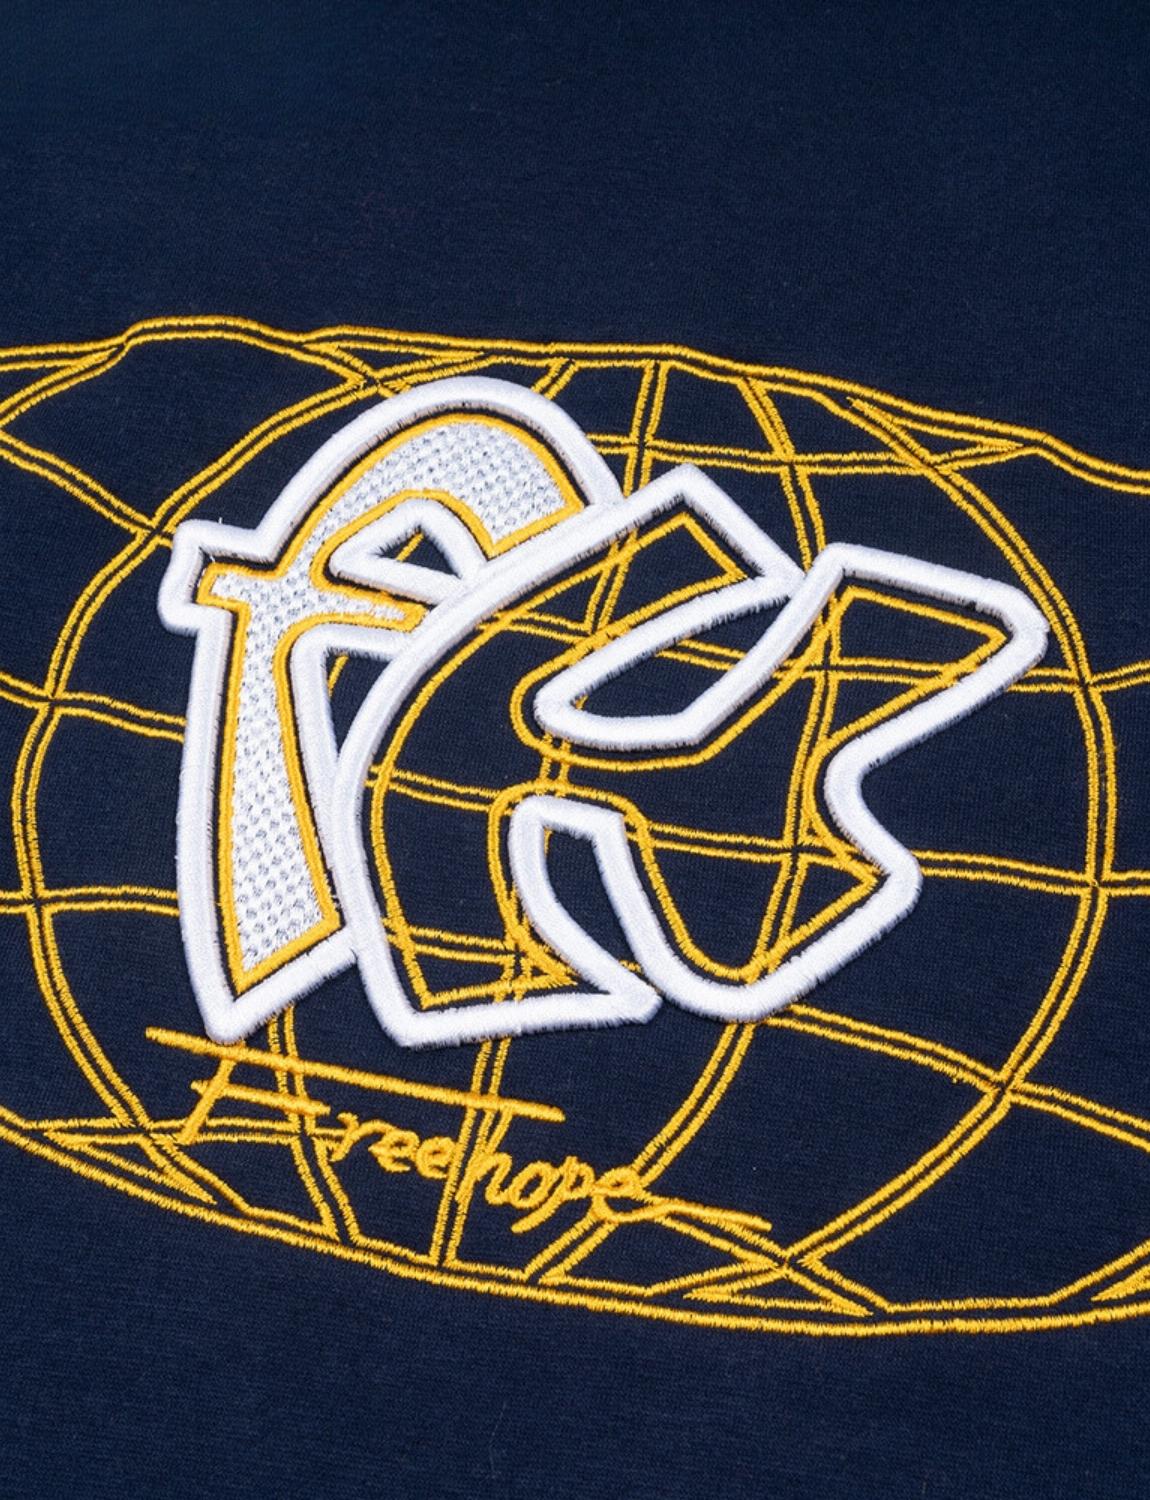 FSW® "World-Globe" Sweatshirt